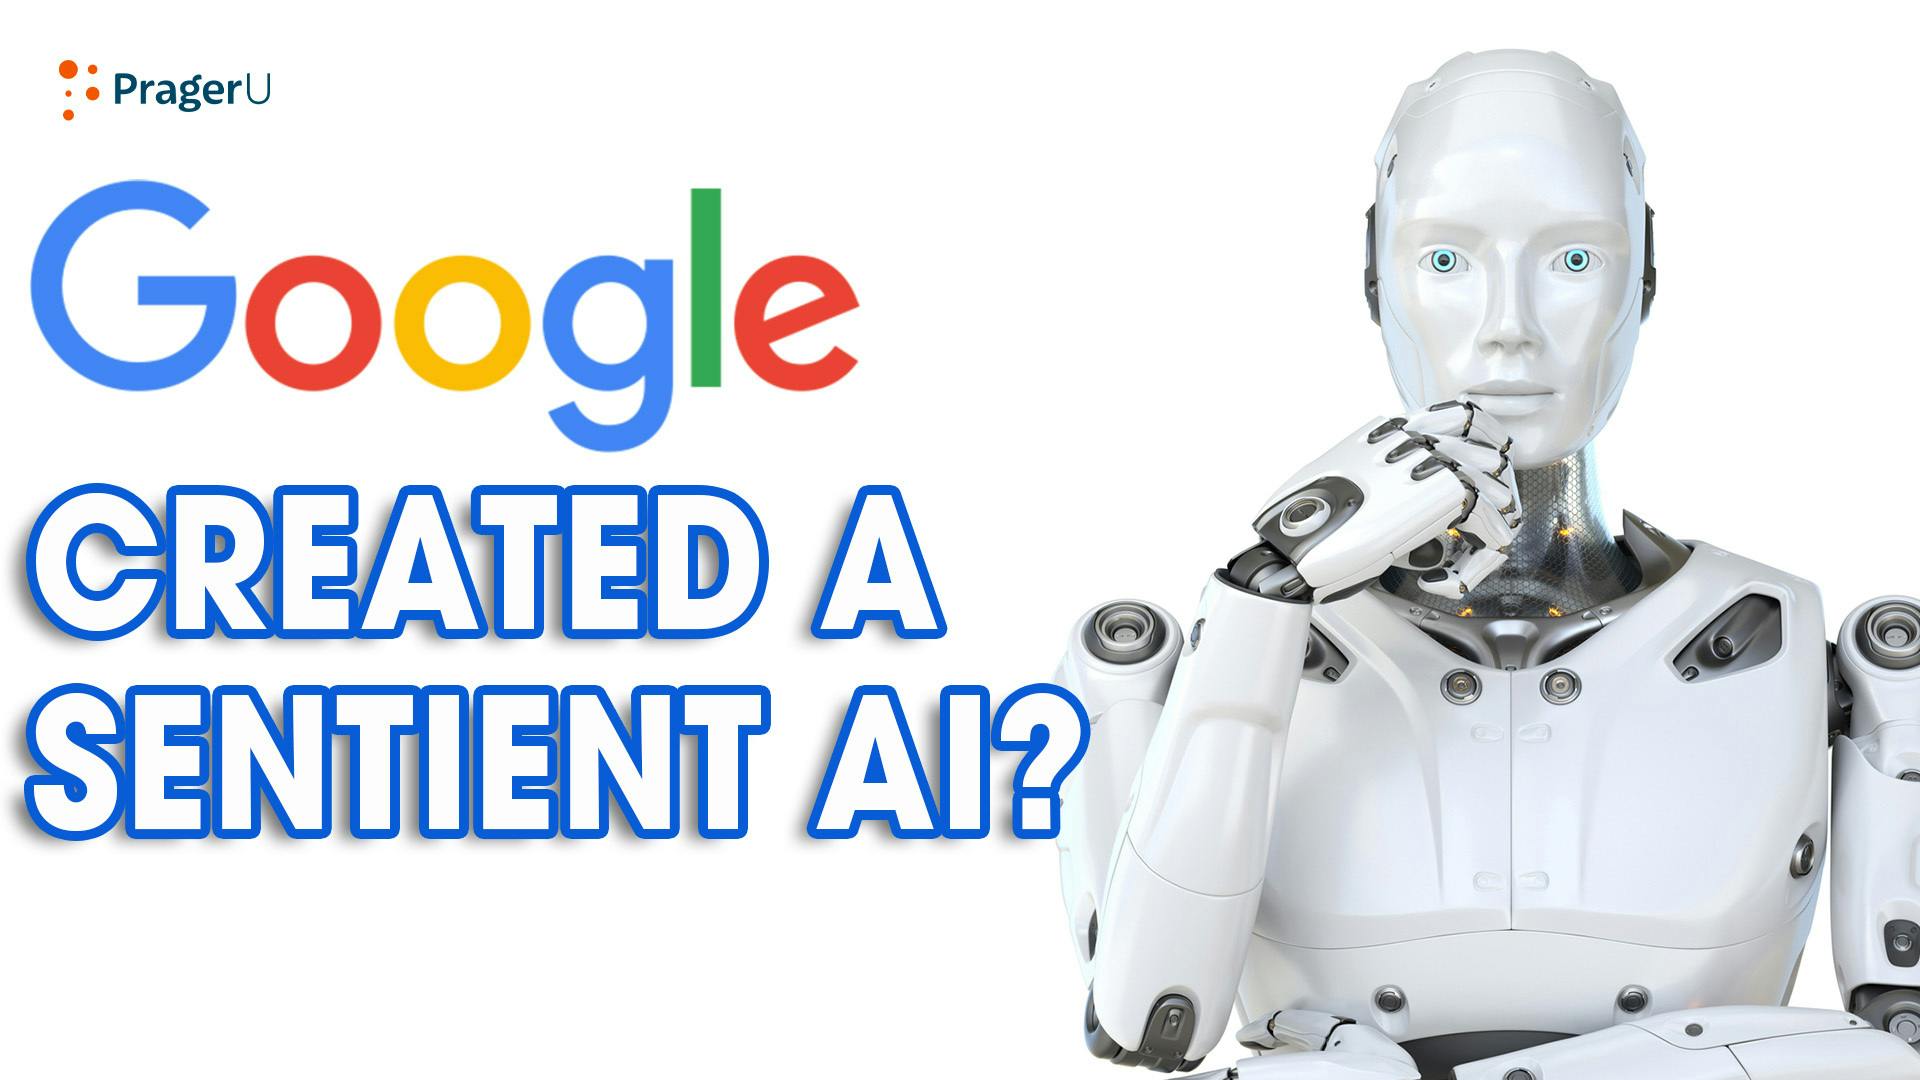 Has Google Created A Sentient AI?: 6/16/2022